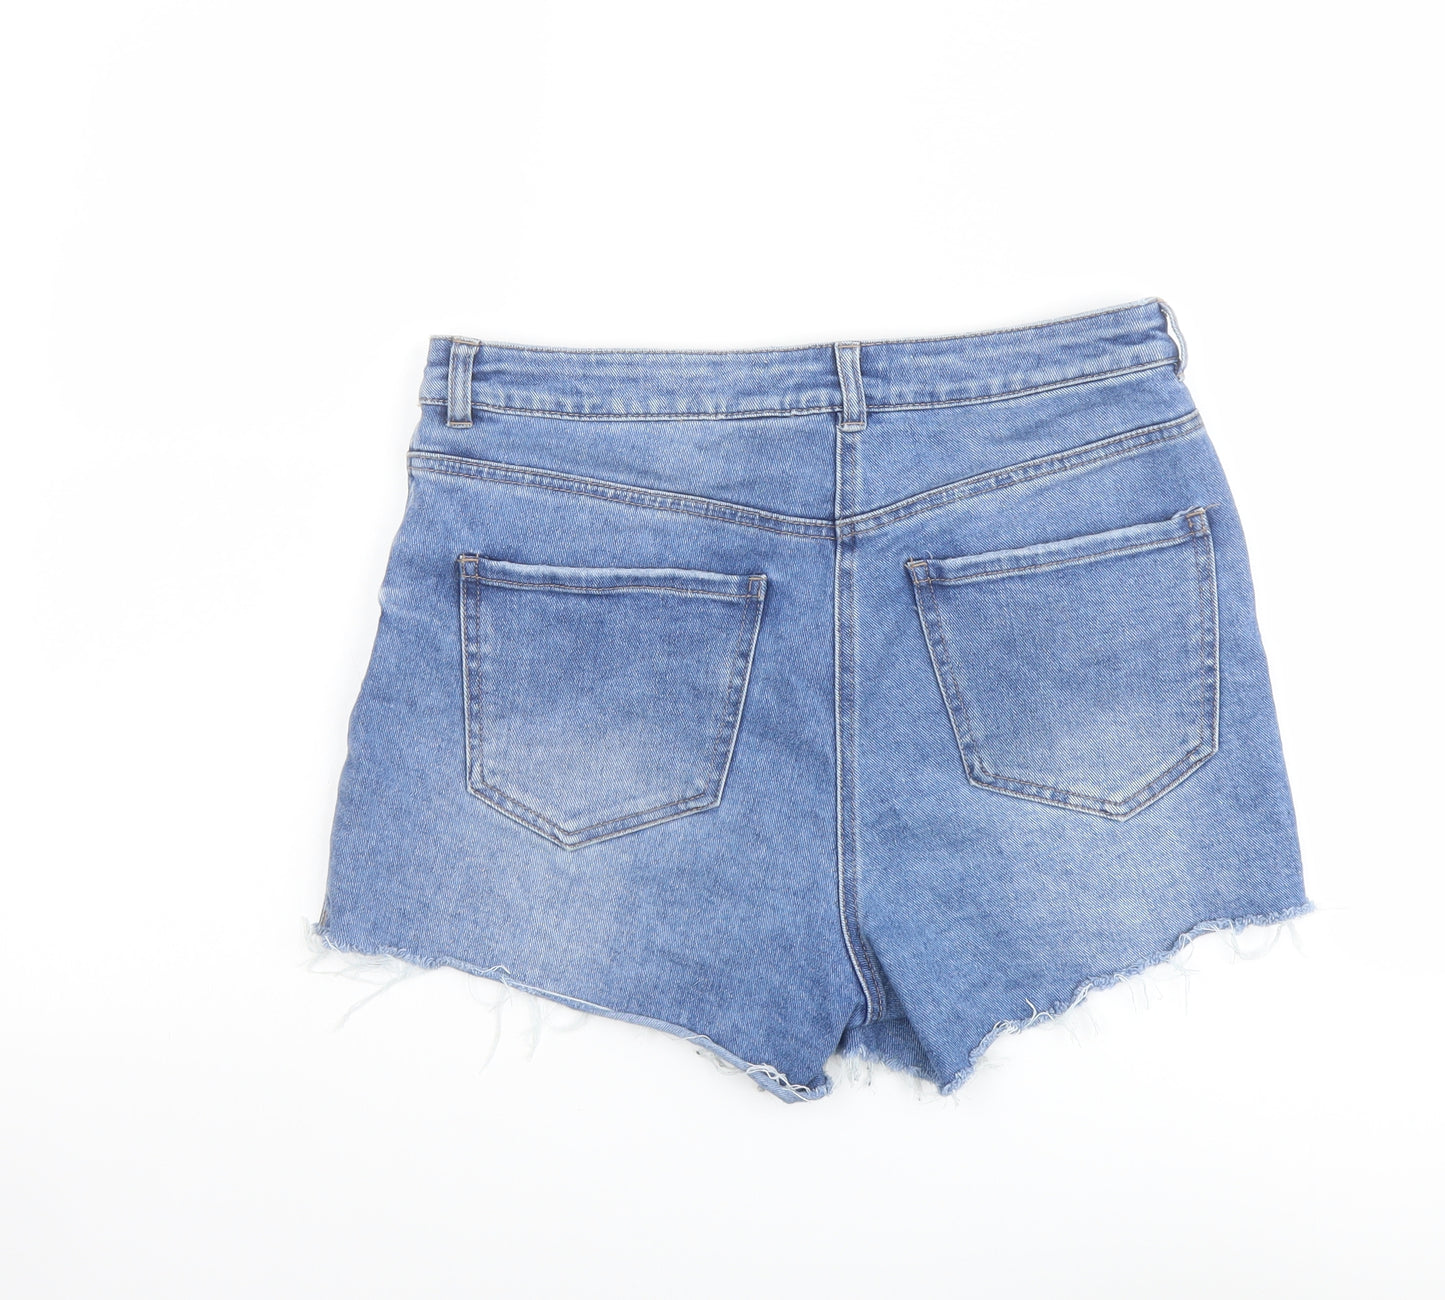 NEXT Womens Blue Cotton Cut-Off Shorts Size 12 L4 in Regular Button